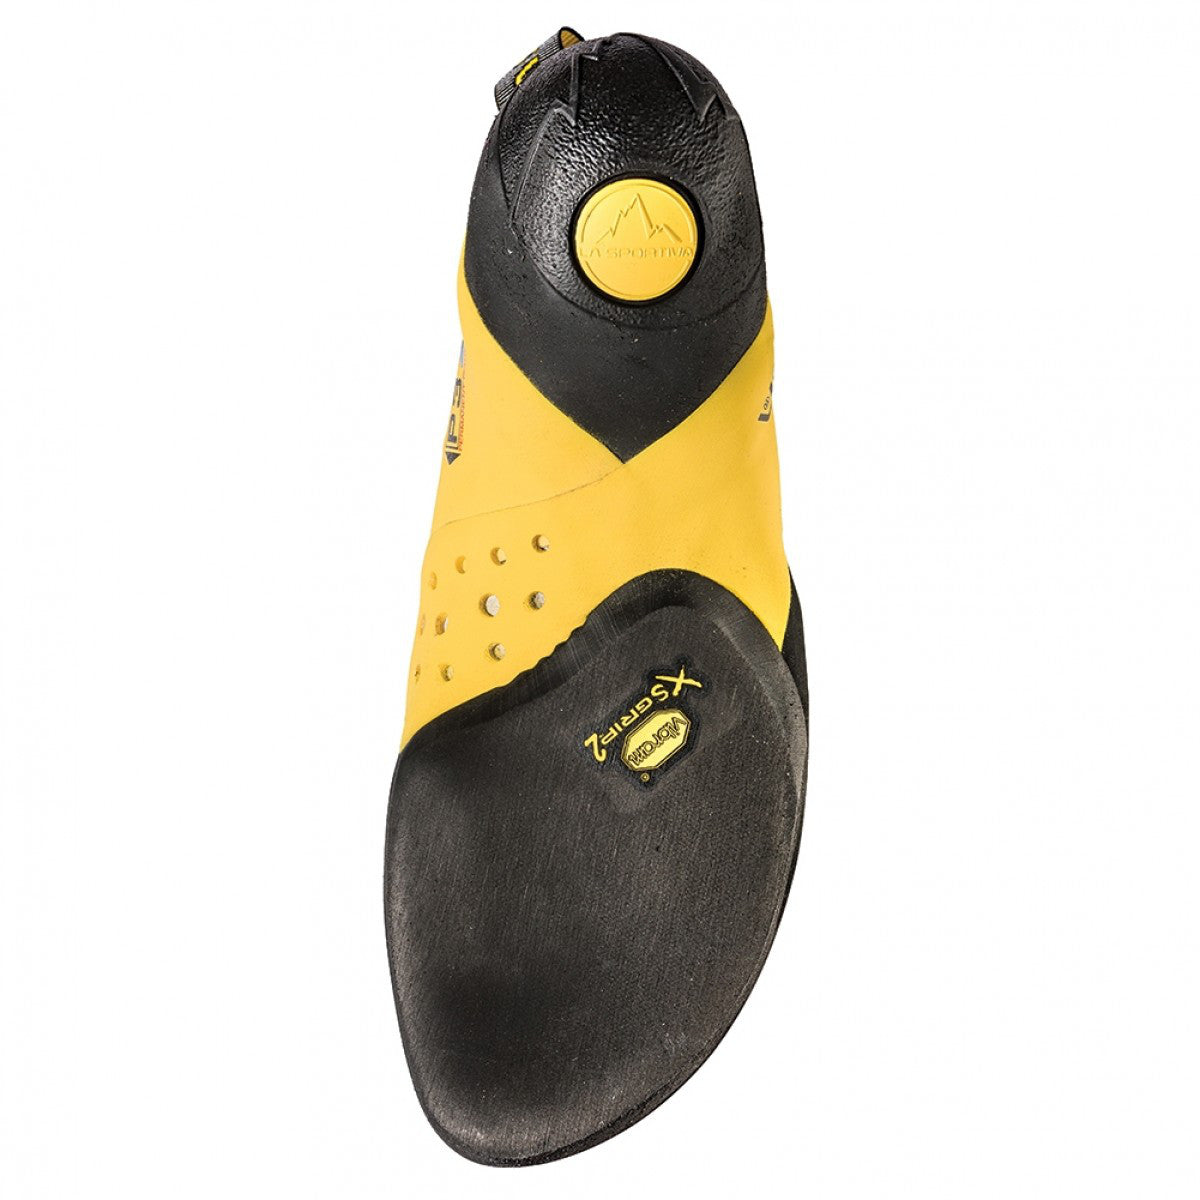 La Sportiva Solution climbing shoe, view of the sole